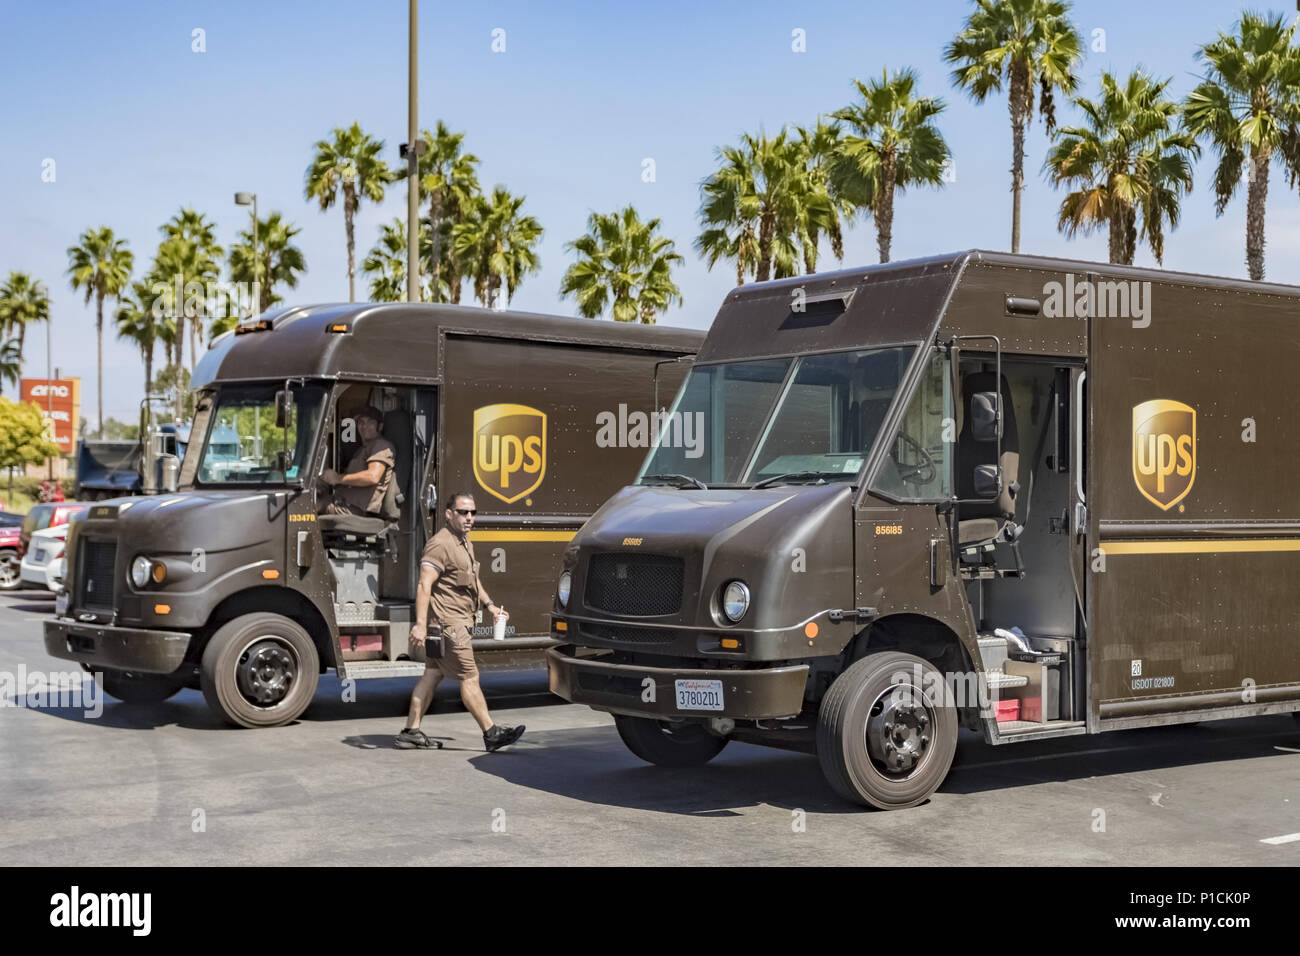 UPS Logistics Service for SMBs